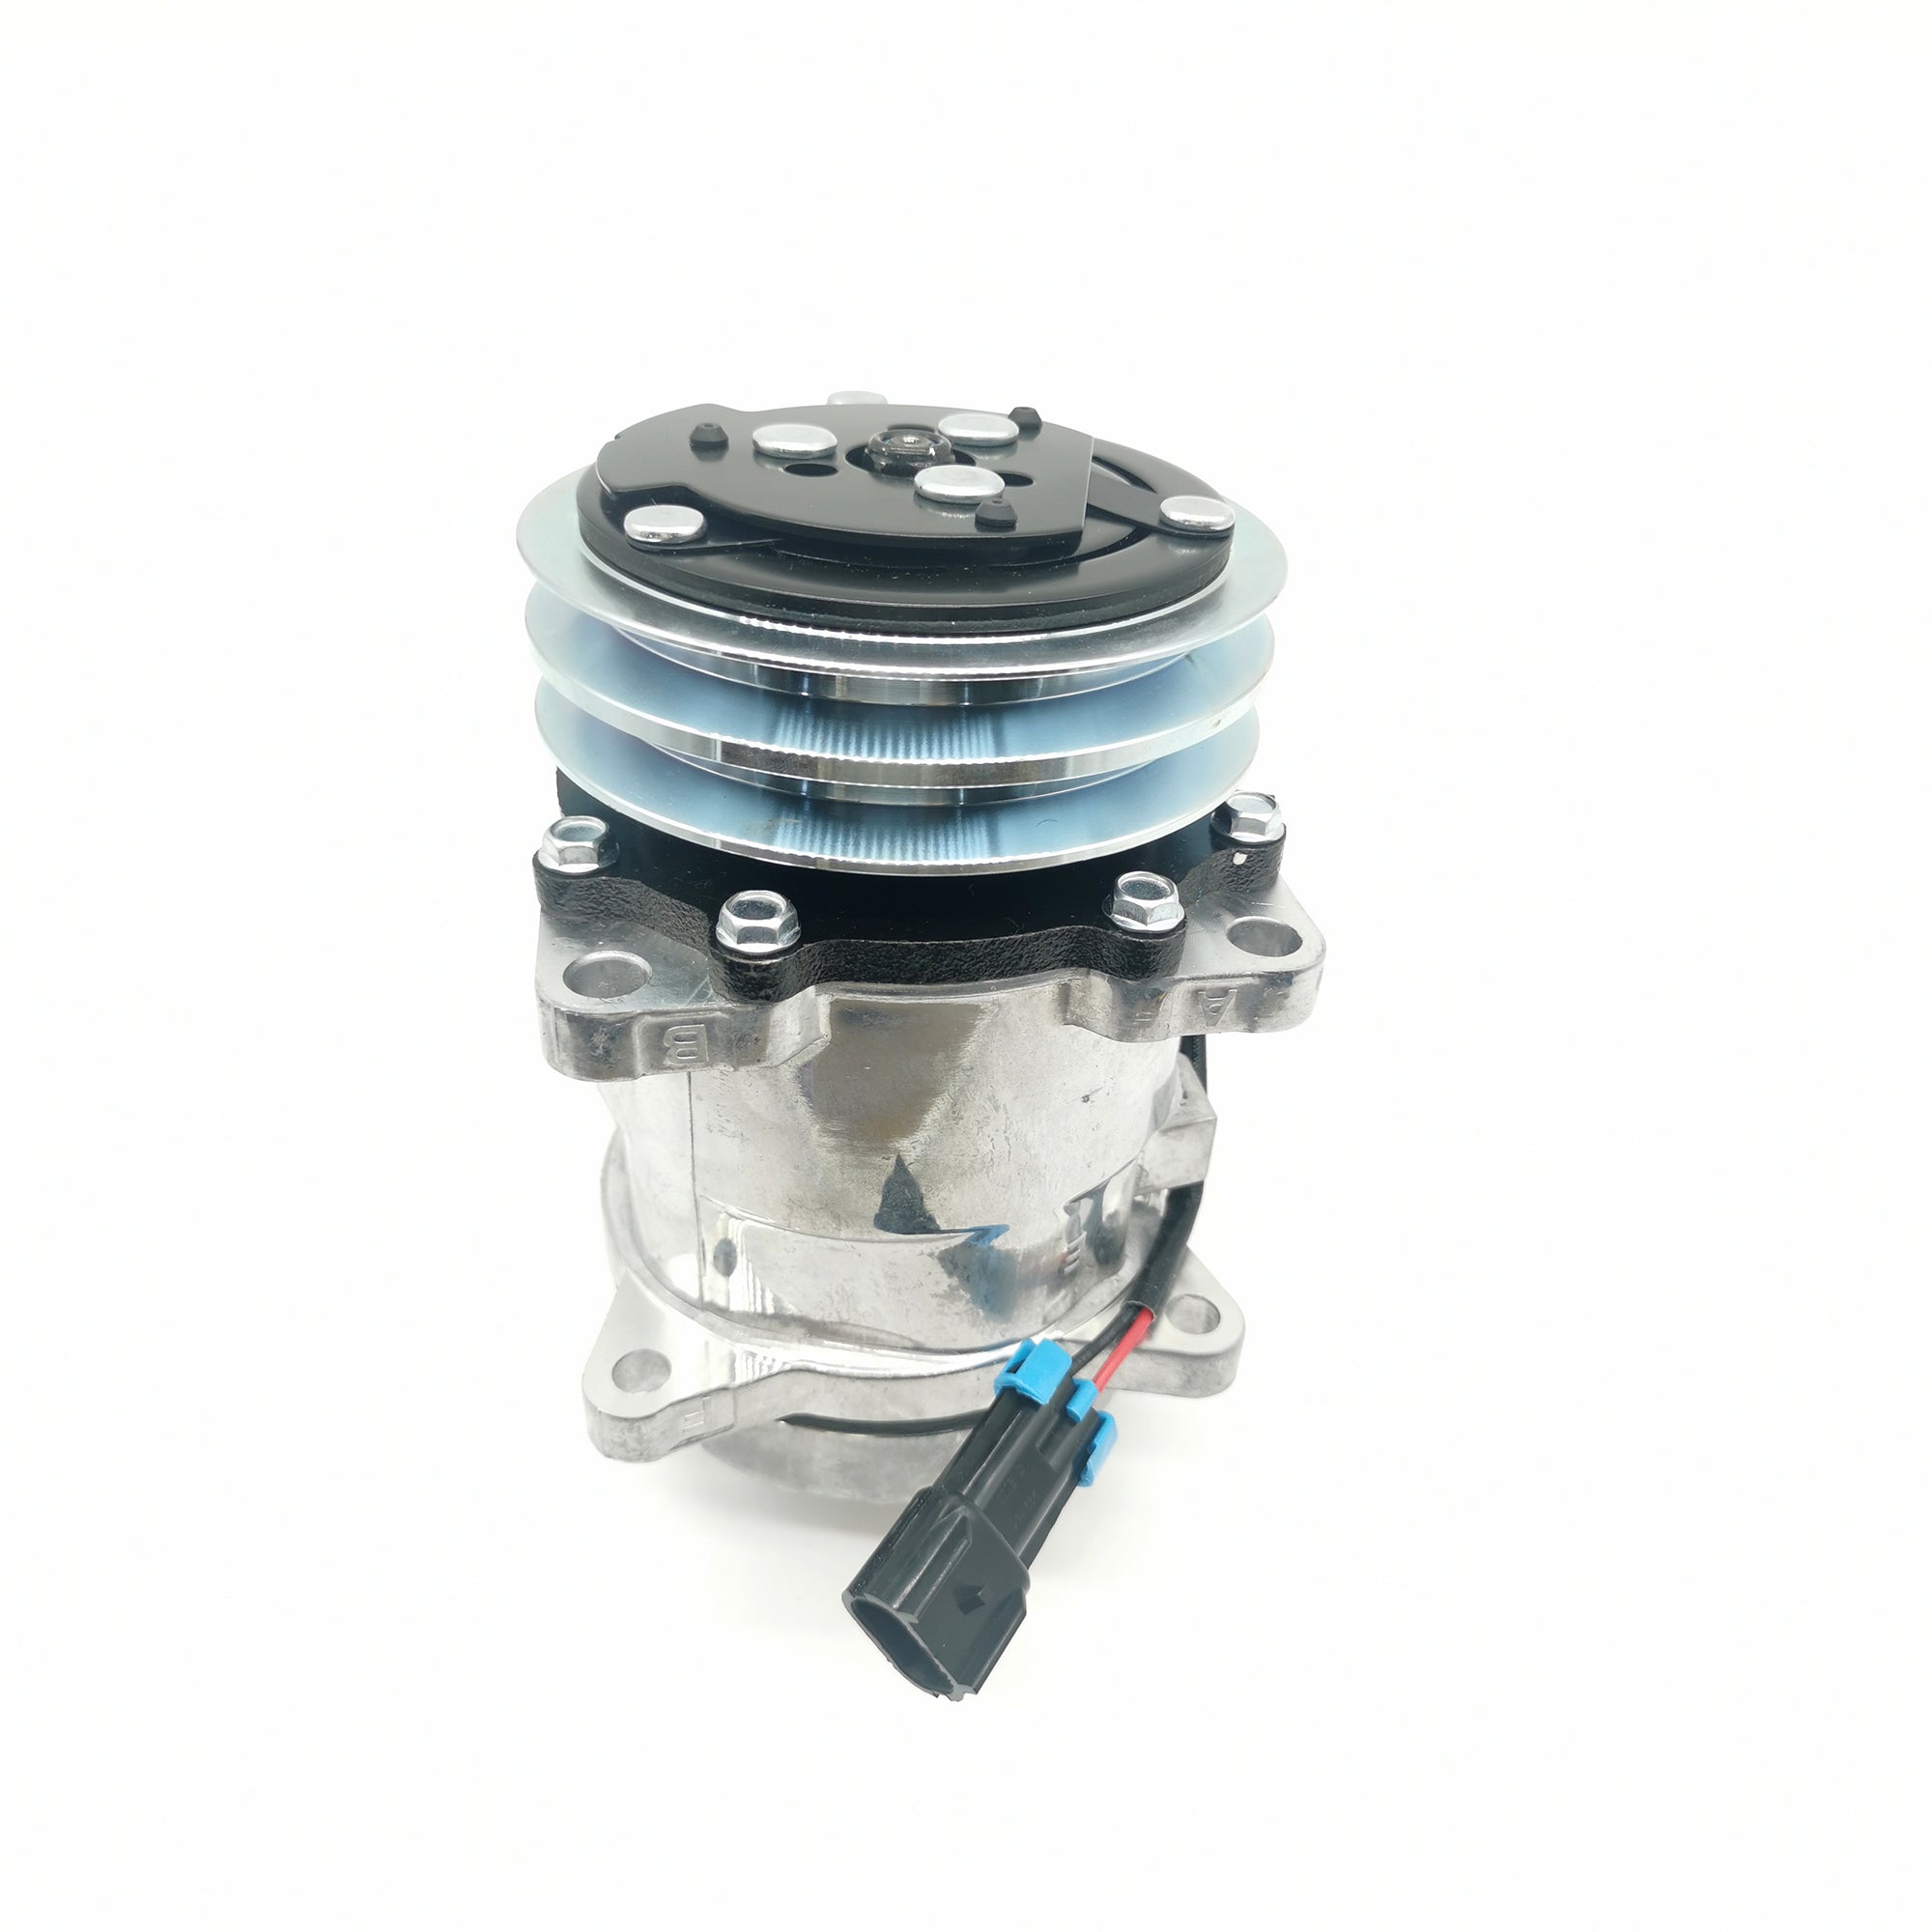 Air Conditioning Compressor 7136676 For Bobcat Skid Steer Loader S150 S185 S205